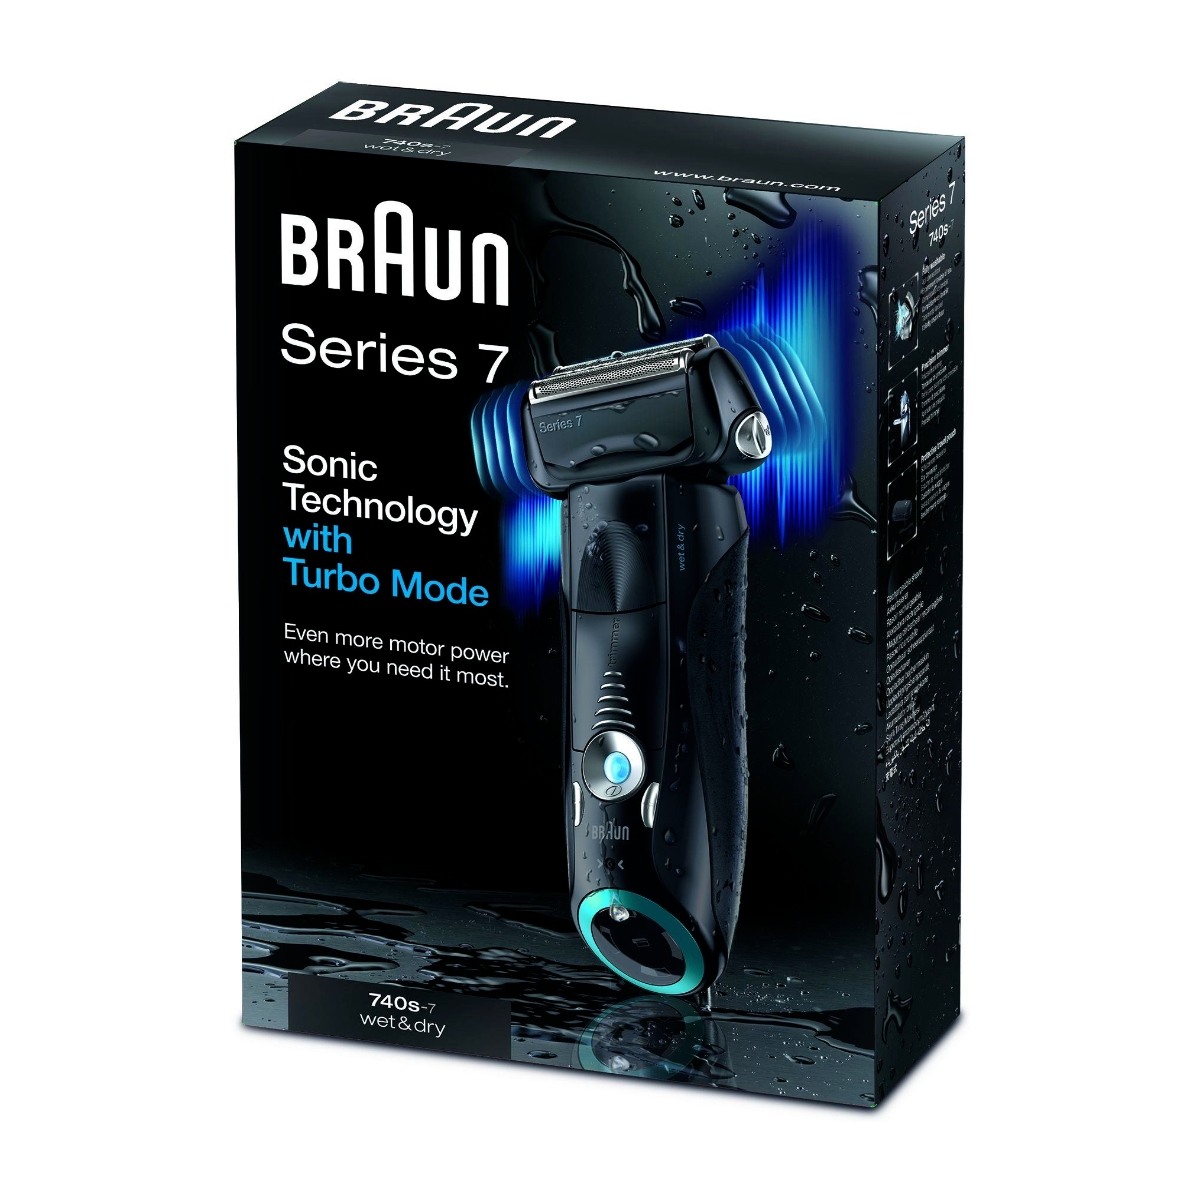 Бритва braun series 7. Braun s7 Series. Braun Series 7 s7. Бритва Браун 9 умная технология Sonic. Утюг Braun Series 7 отзывы.